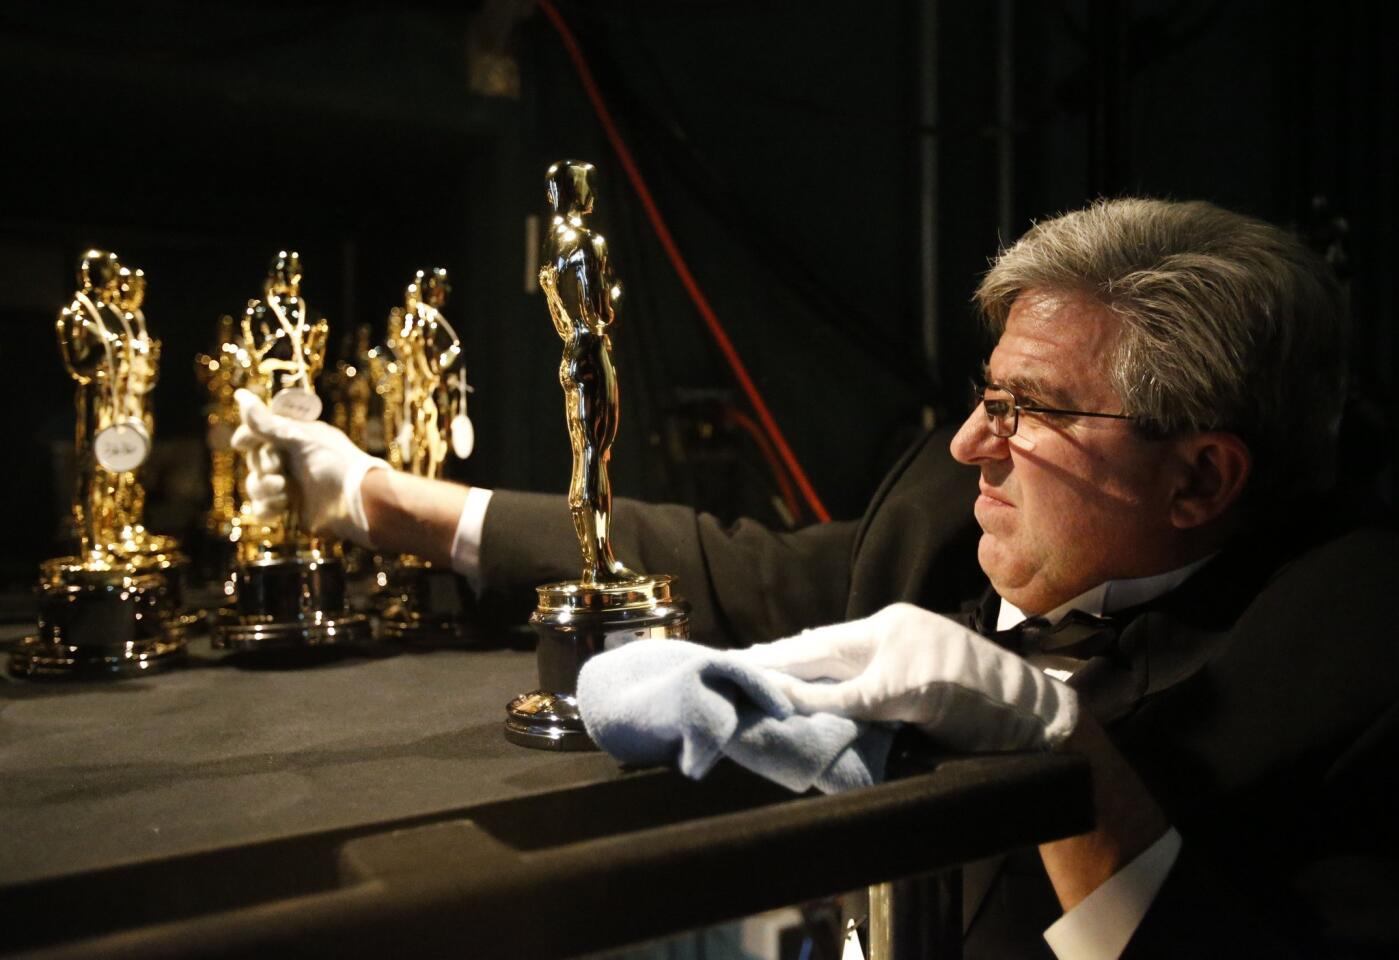 Oscar statuettes get the white-glove treatment.